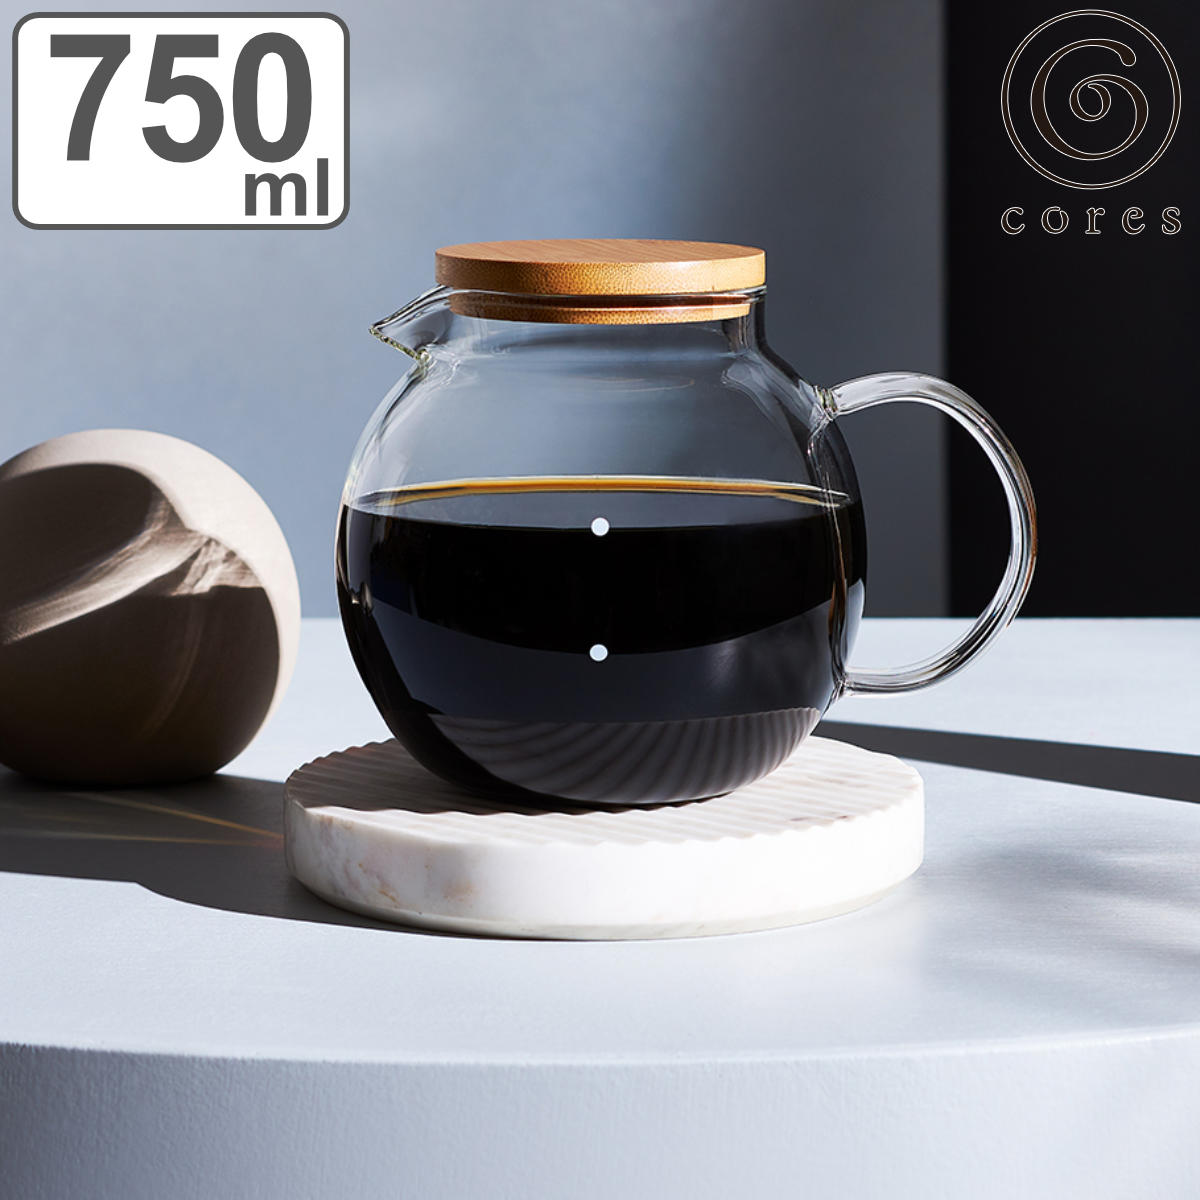 Cores コーヒーサーバー 750ml 6カップ用 クリアガラスサーバー （ コレス 食洗機対応  ...